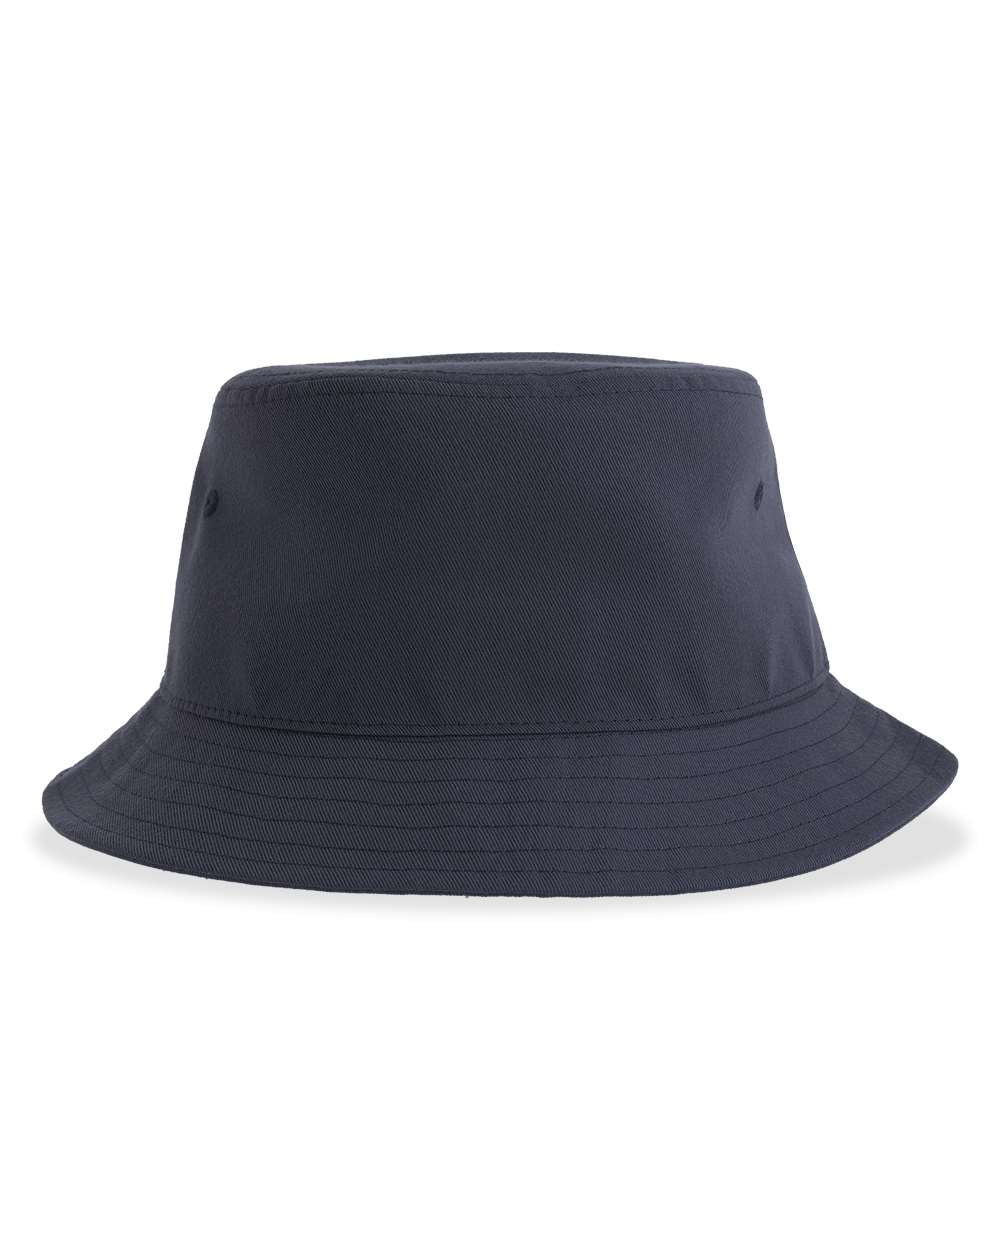 Customizable Atlantis Headwear Geob Bucket Hat in navy